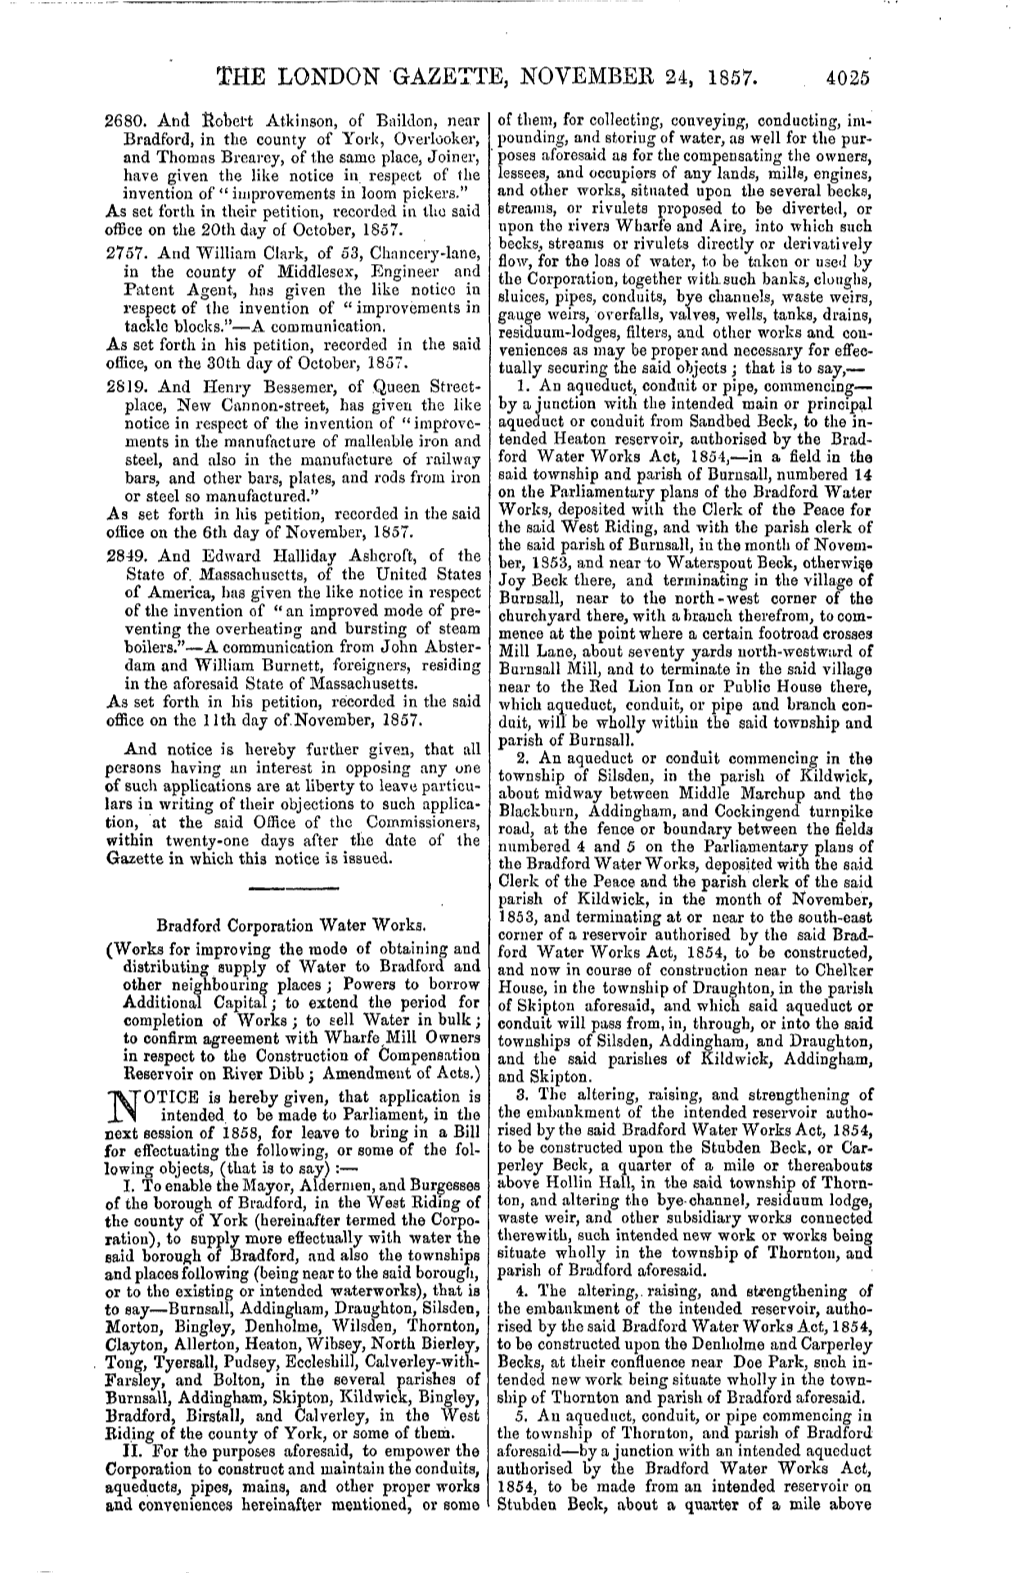 The London Gazette, November 24, 1857. 4025